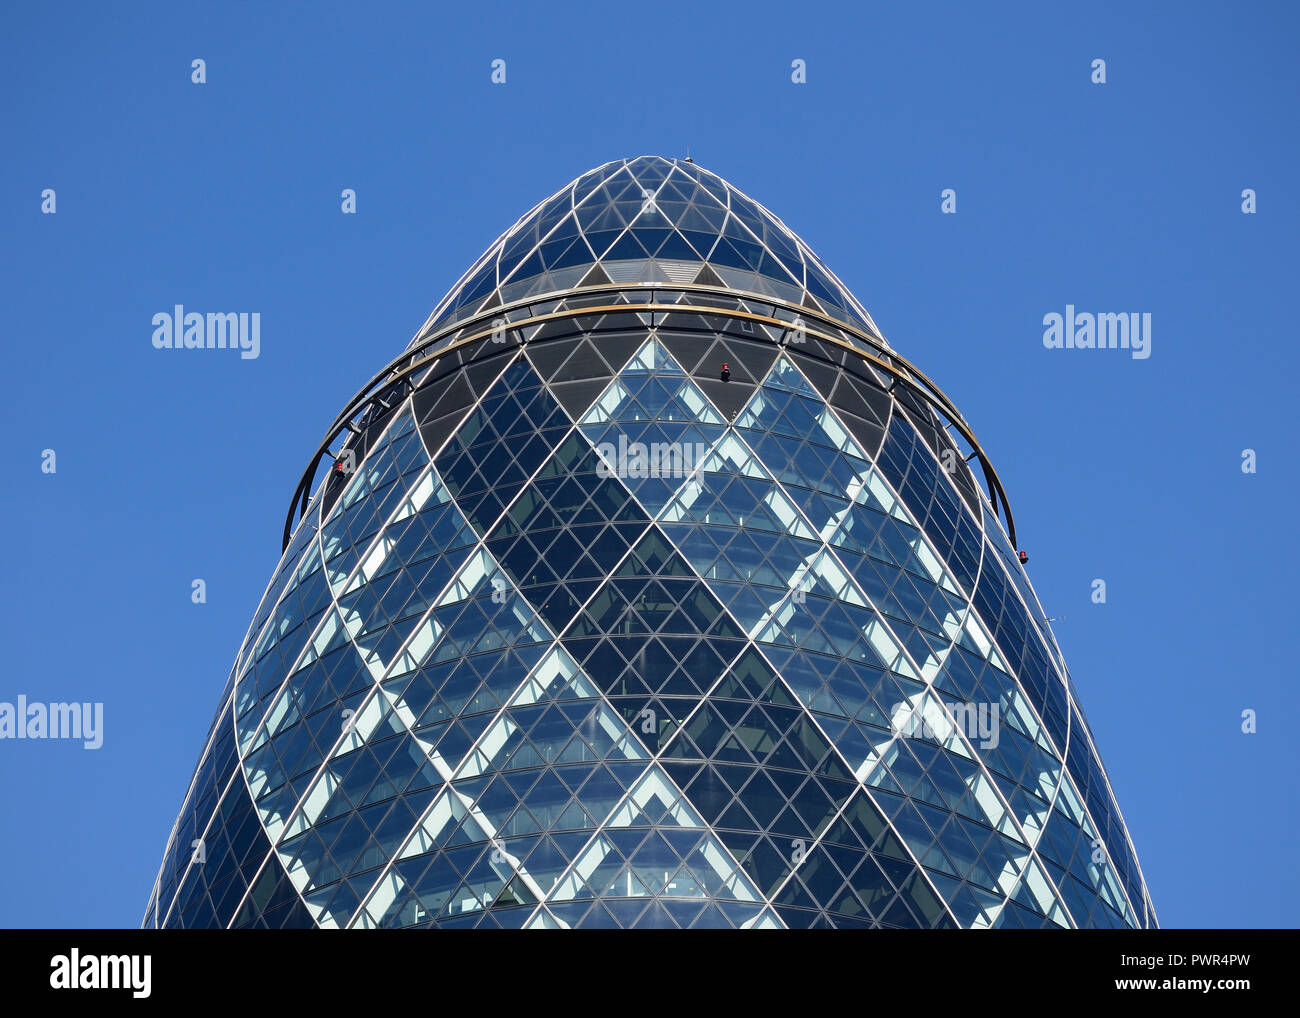 Le Gherkin Building, 30 St Mary Axe, Londres, Royaume-Uni Banque D'Images